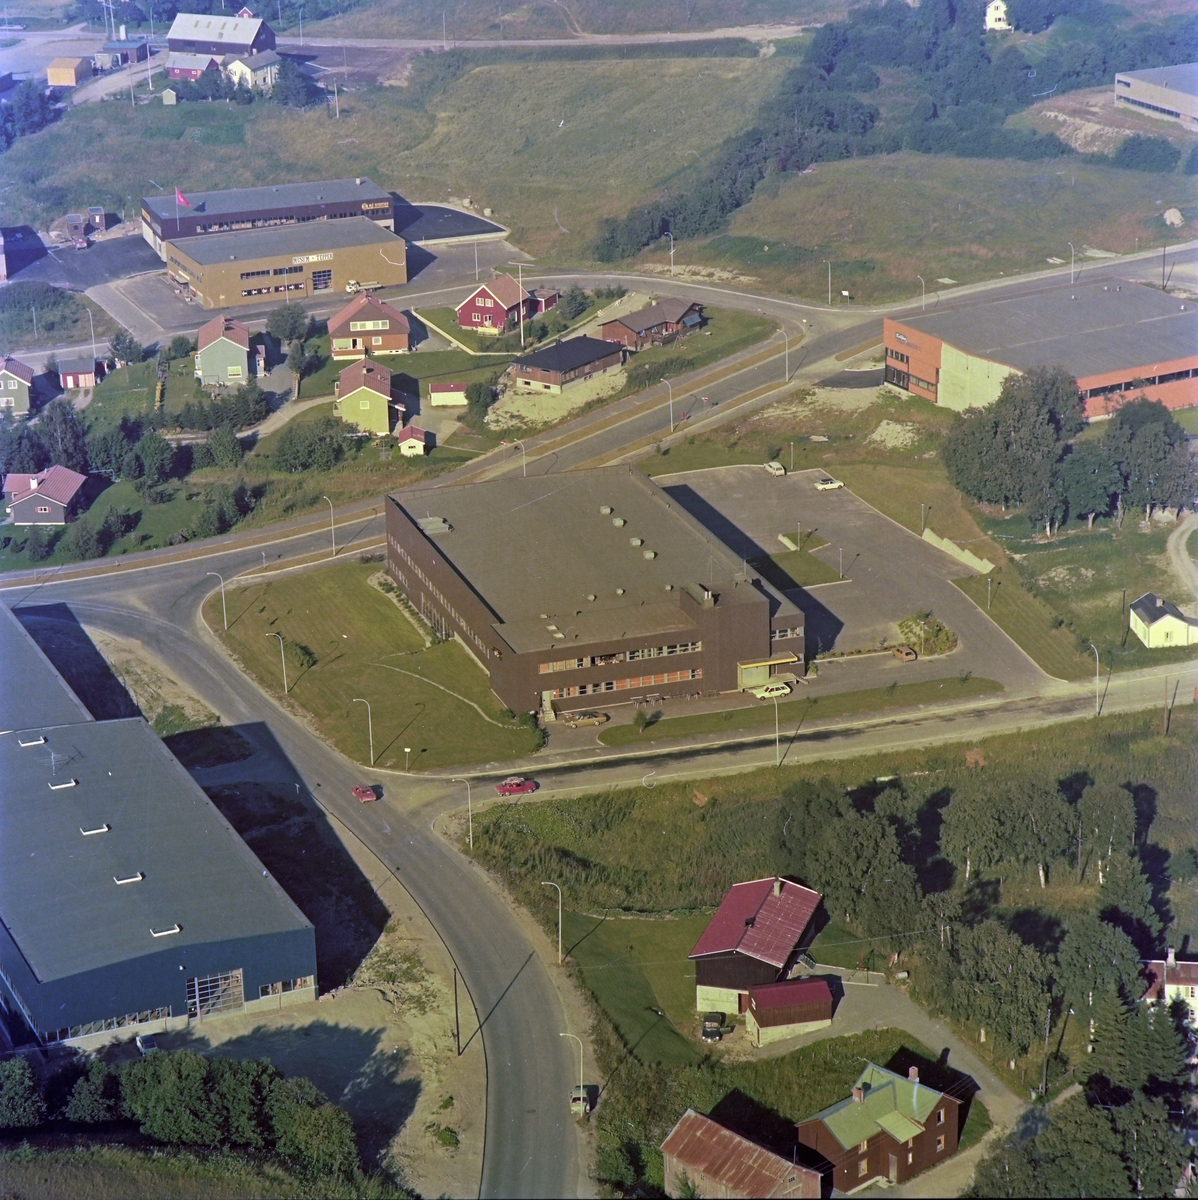 Flyfoto over Fossegrenda med Foto Schrøders nye bygg